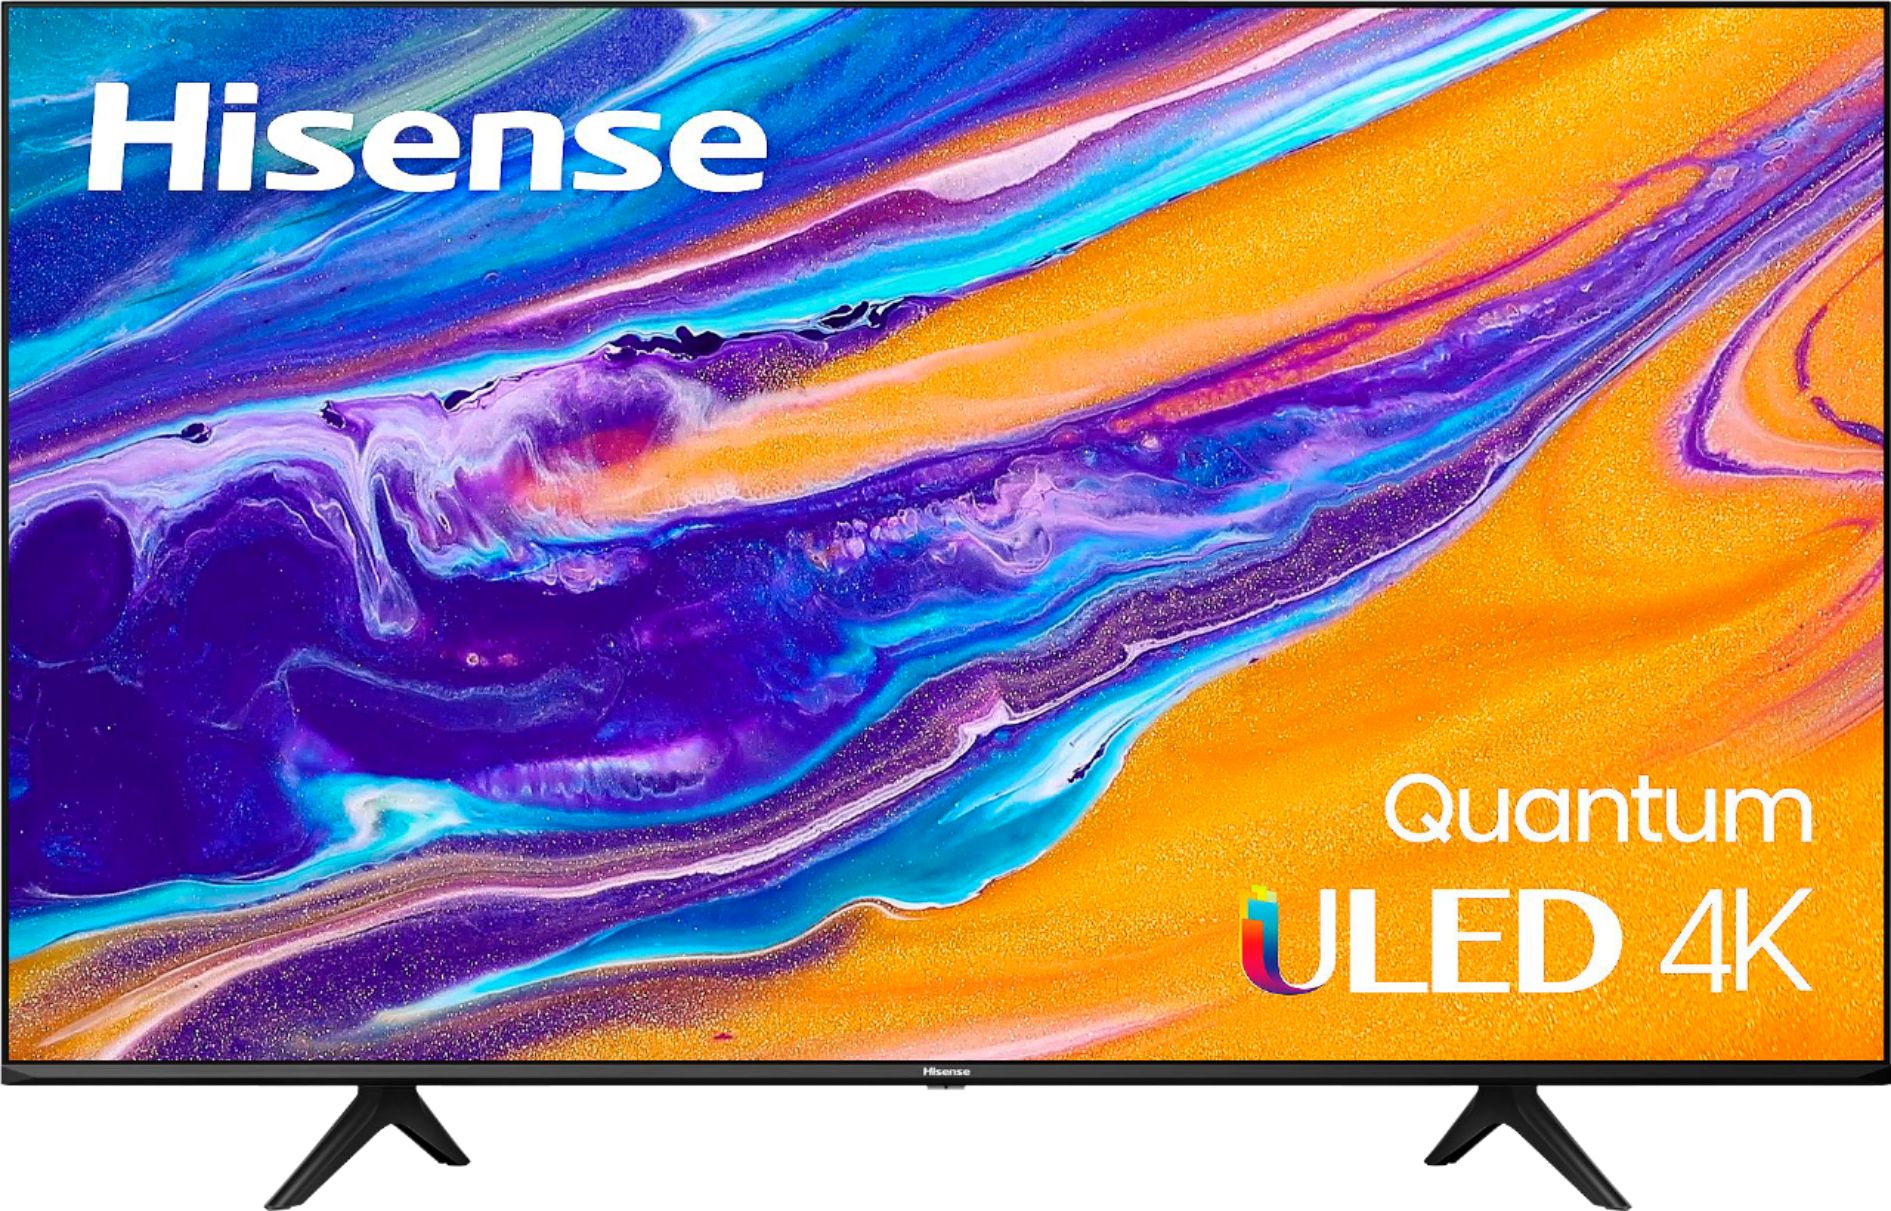 75" Hisense U6G Series Quantum ULED 4K UHD Smart Android HDTV $799